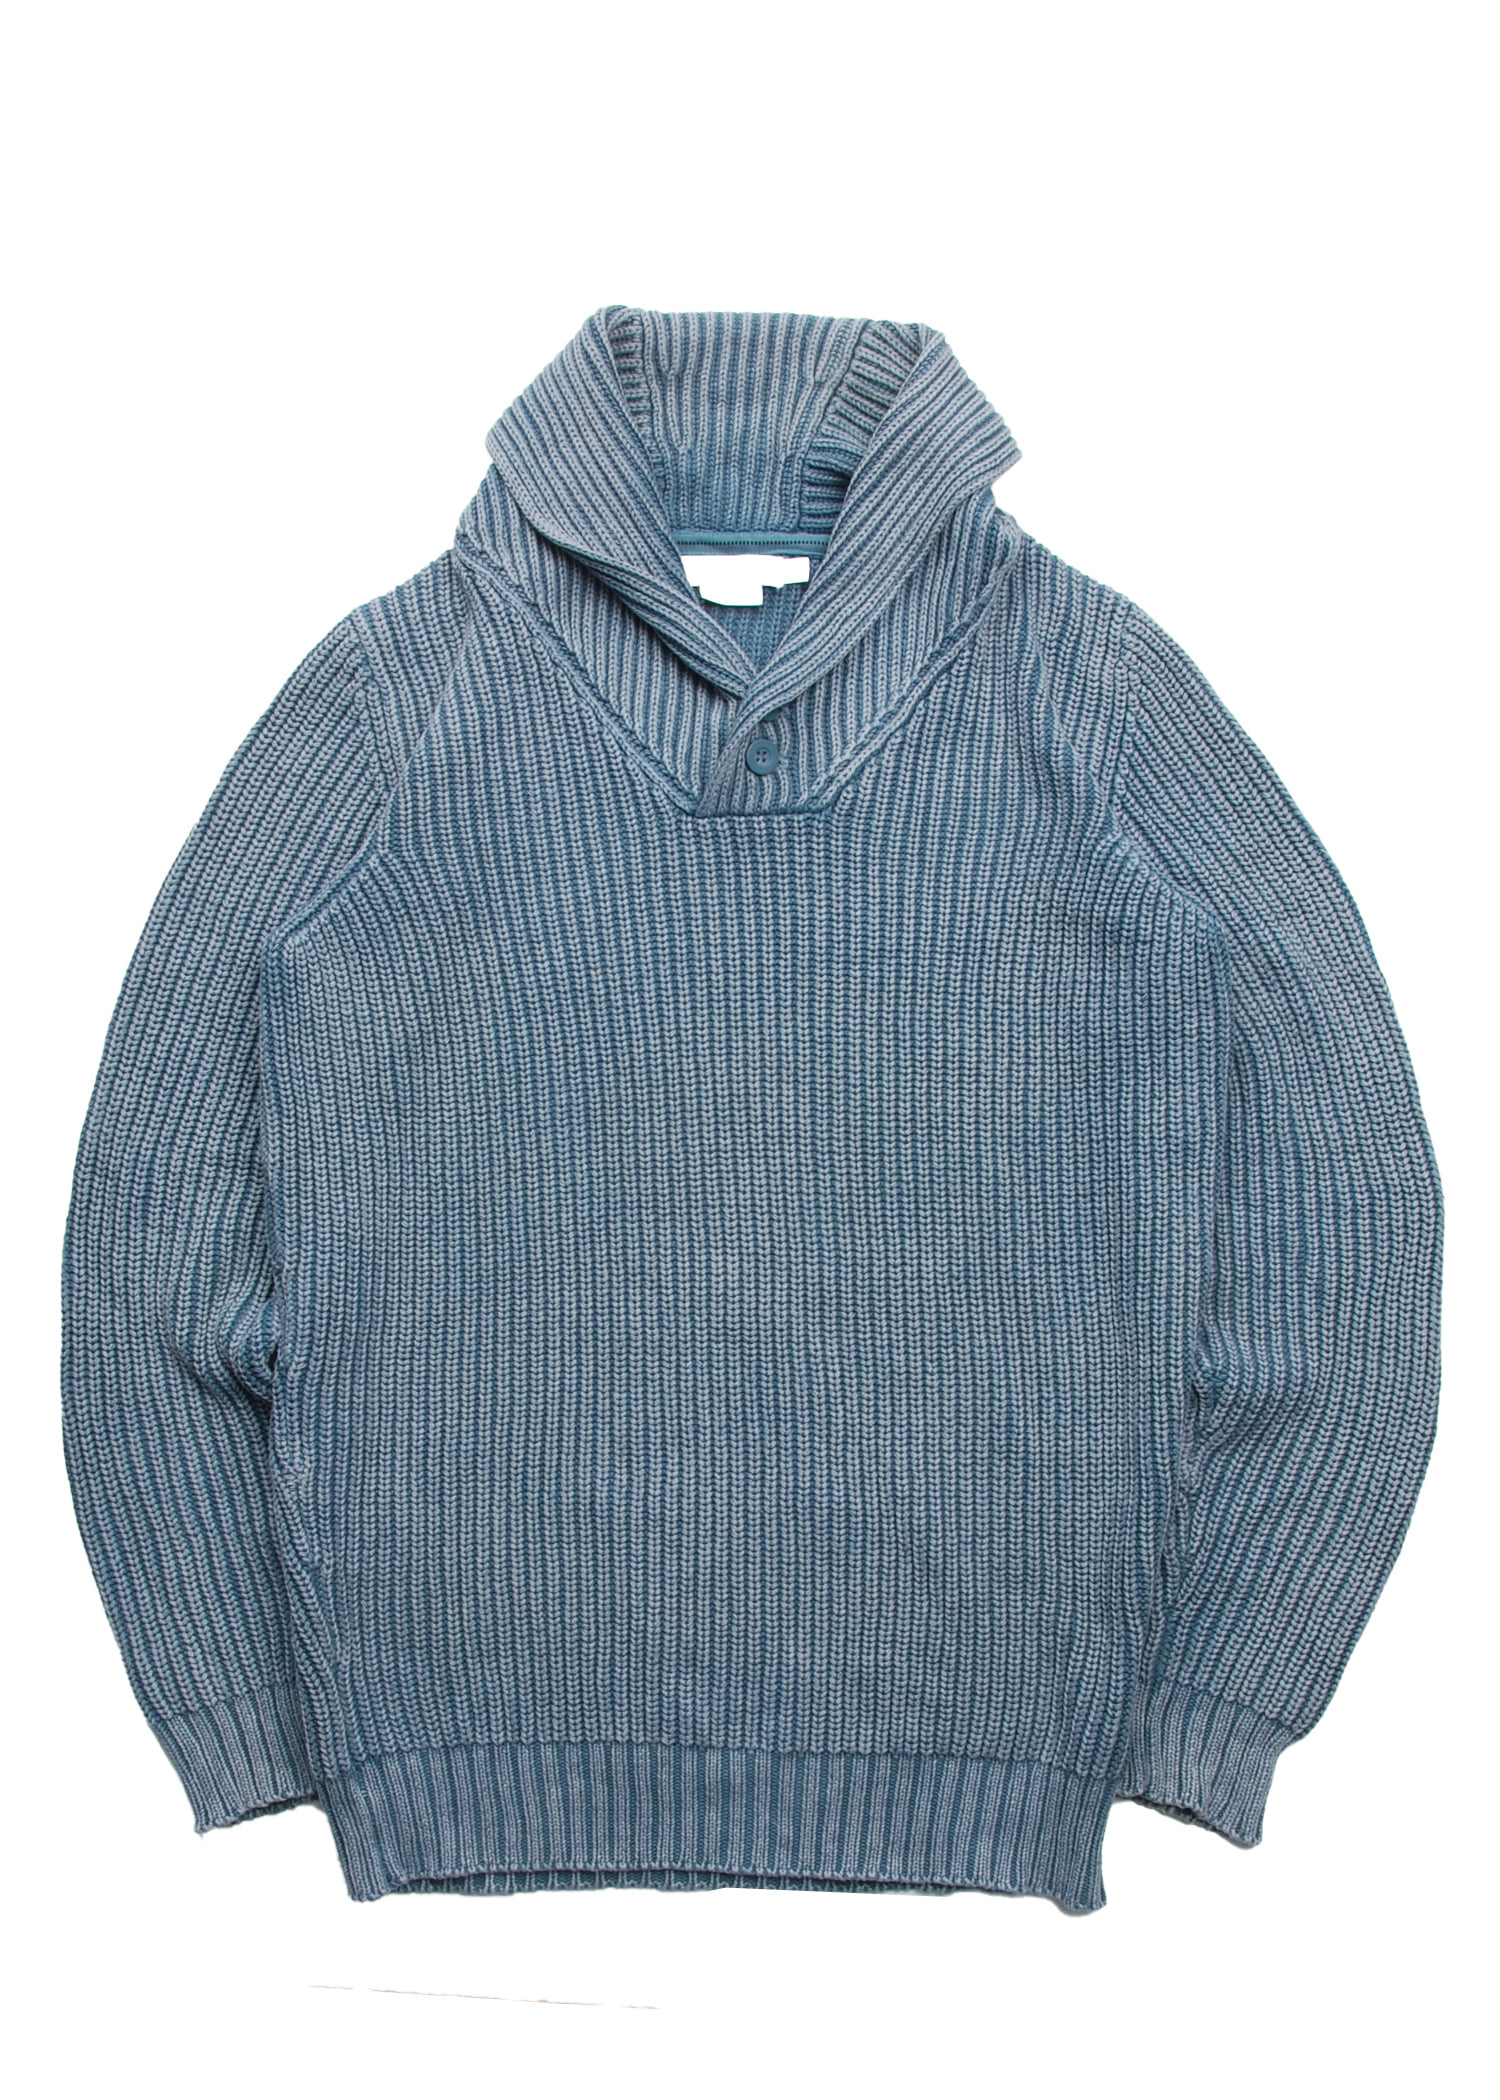 select vintage : indigo shawl knit